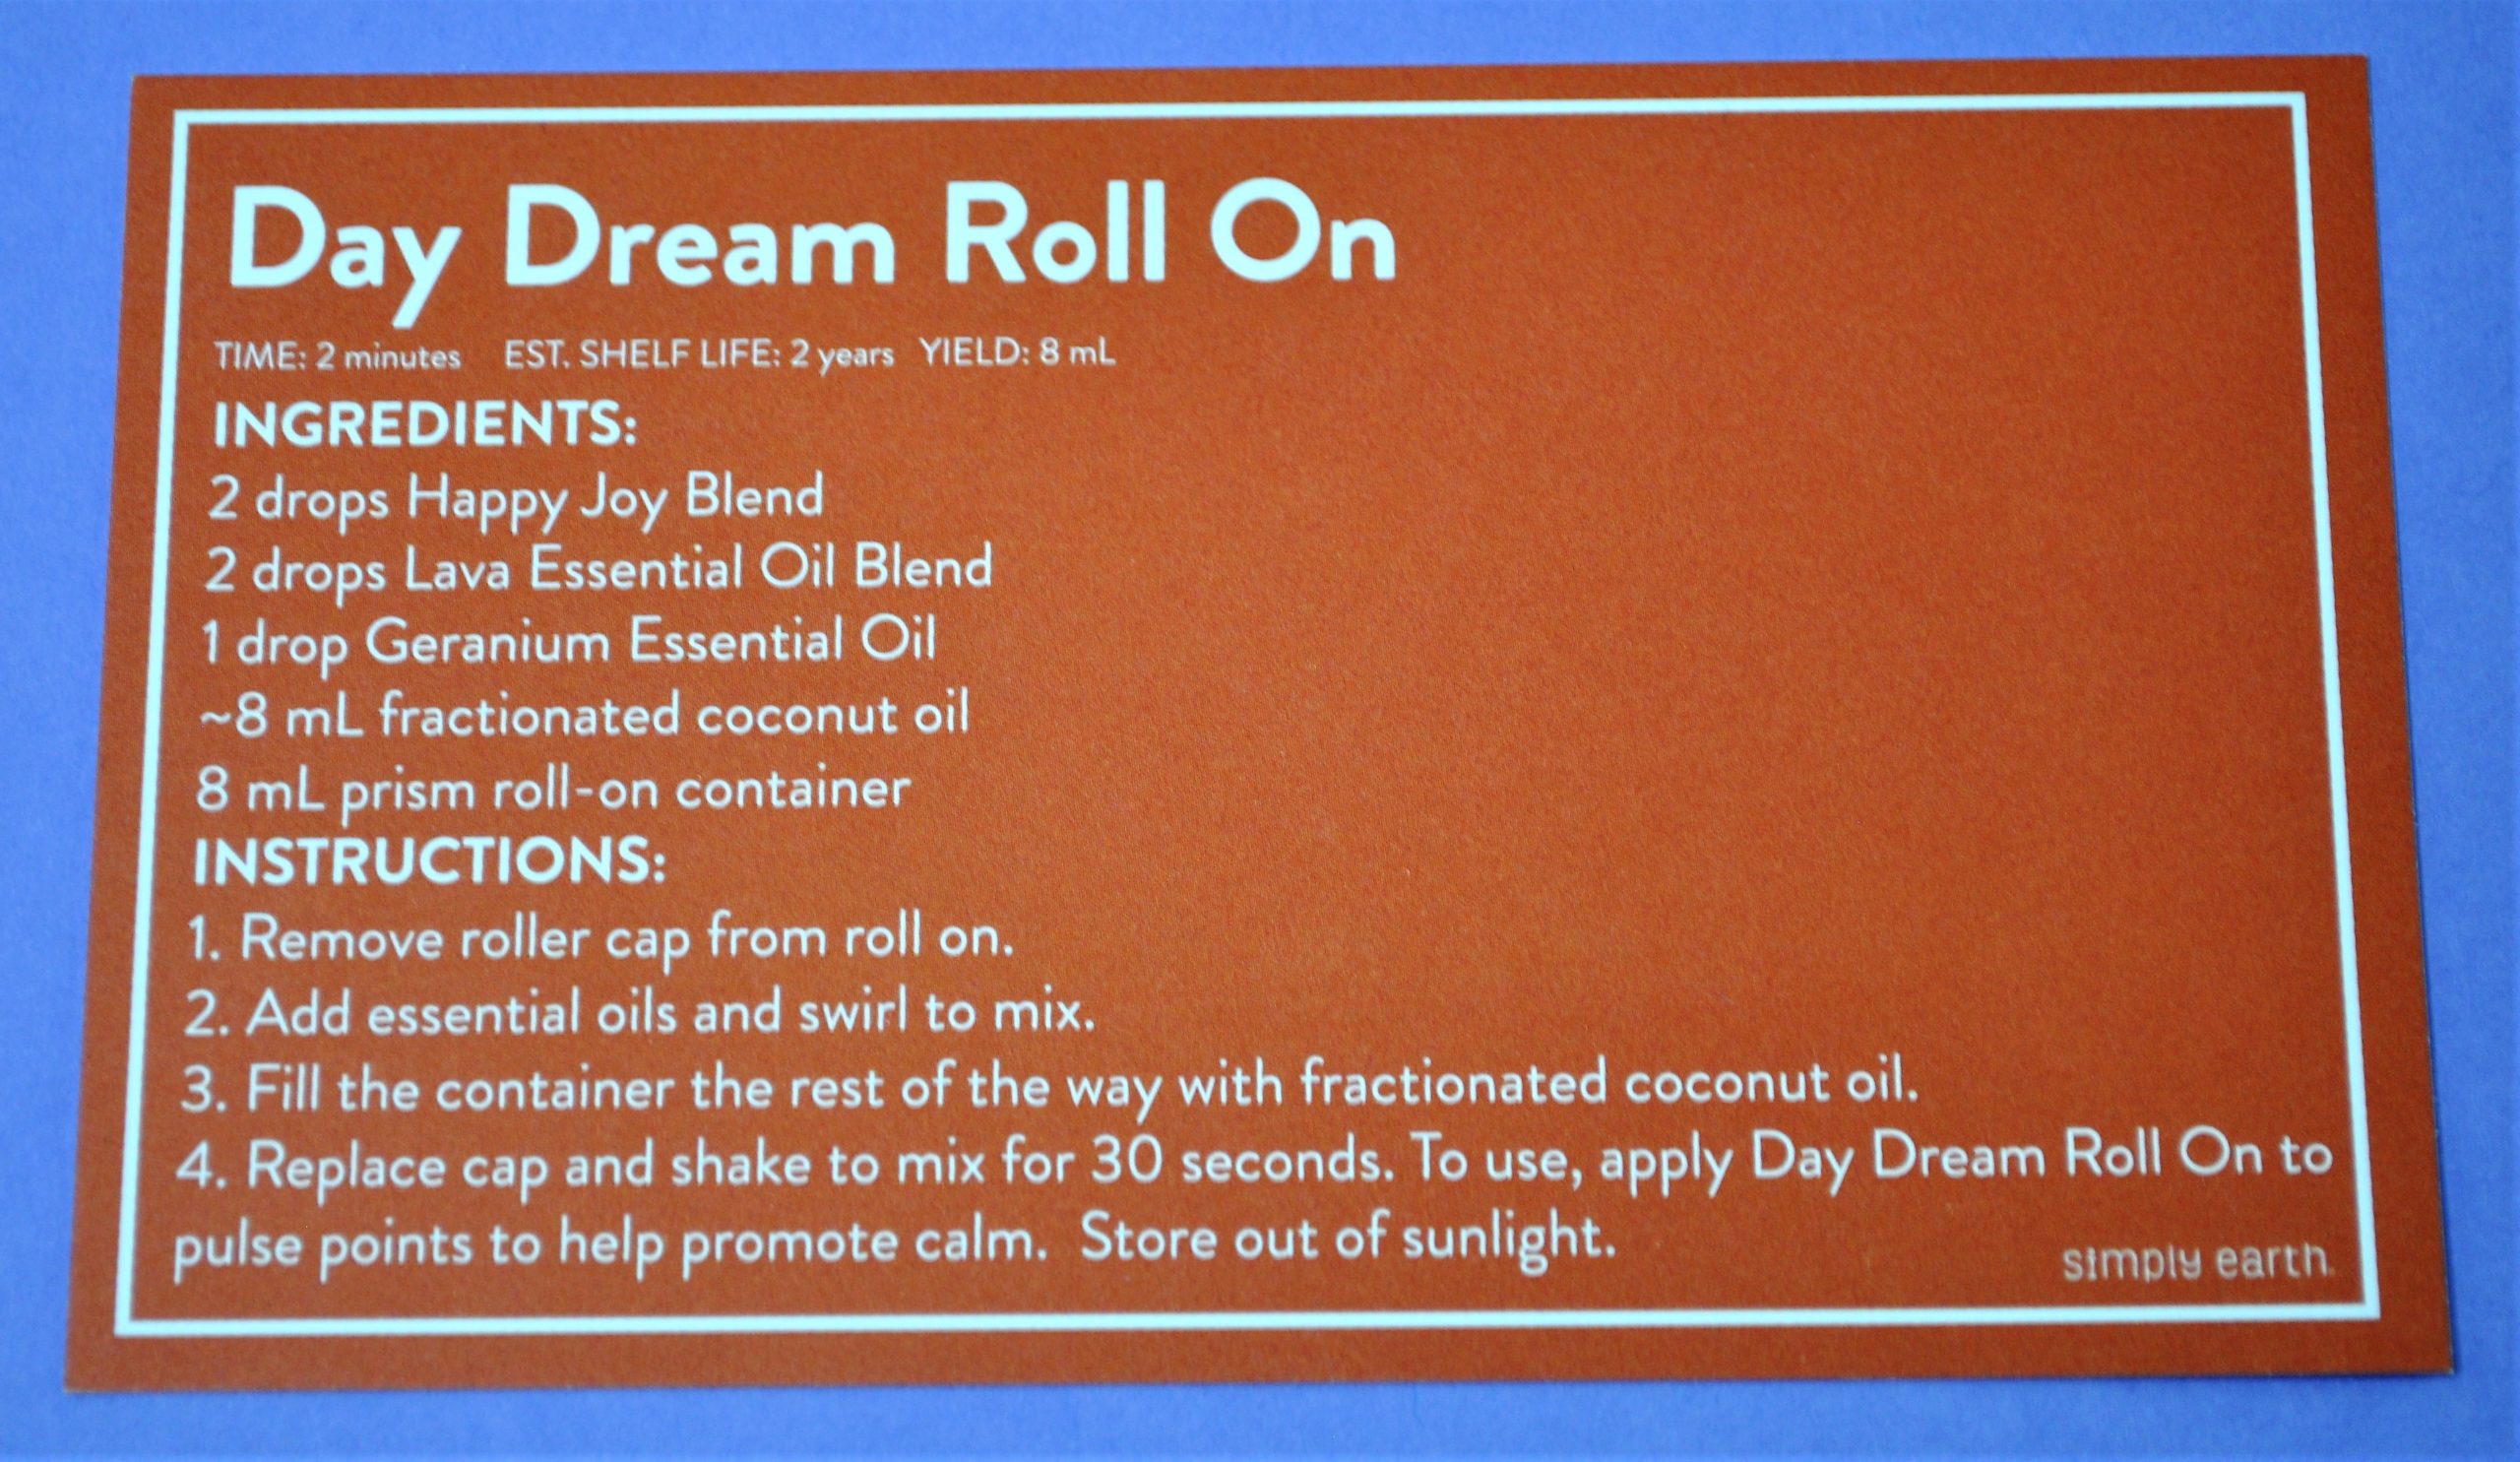 Day Dream Roll On Recipe Card